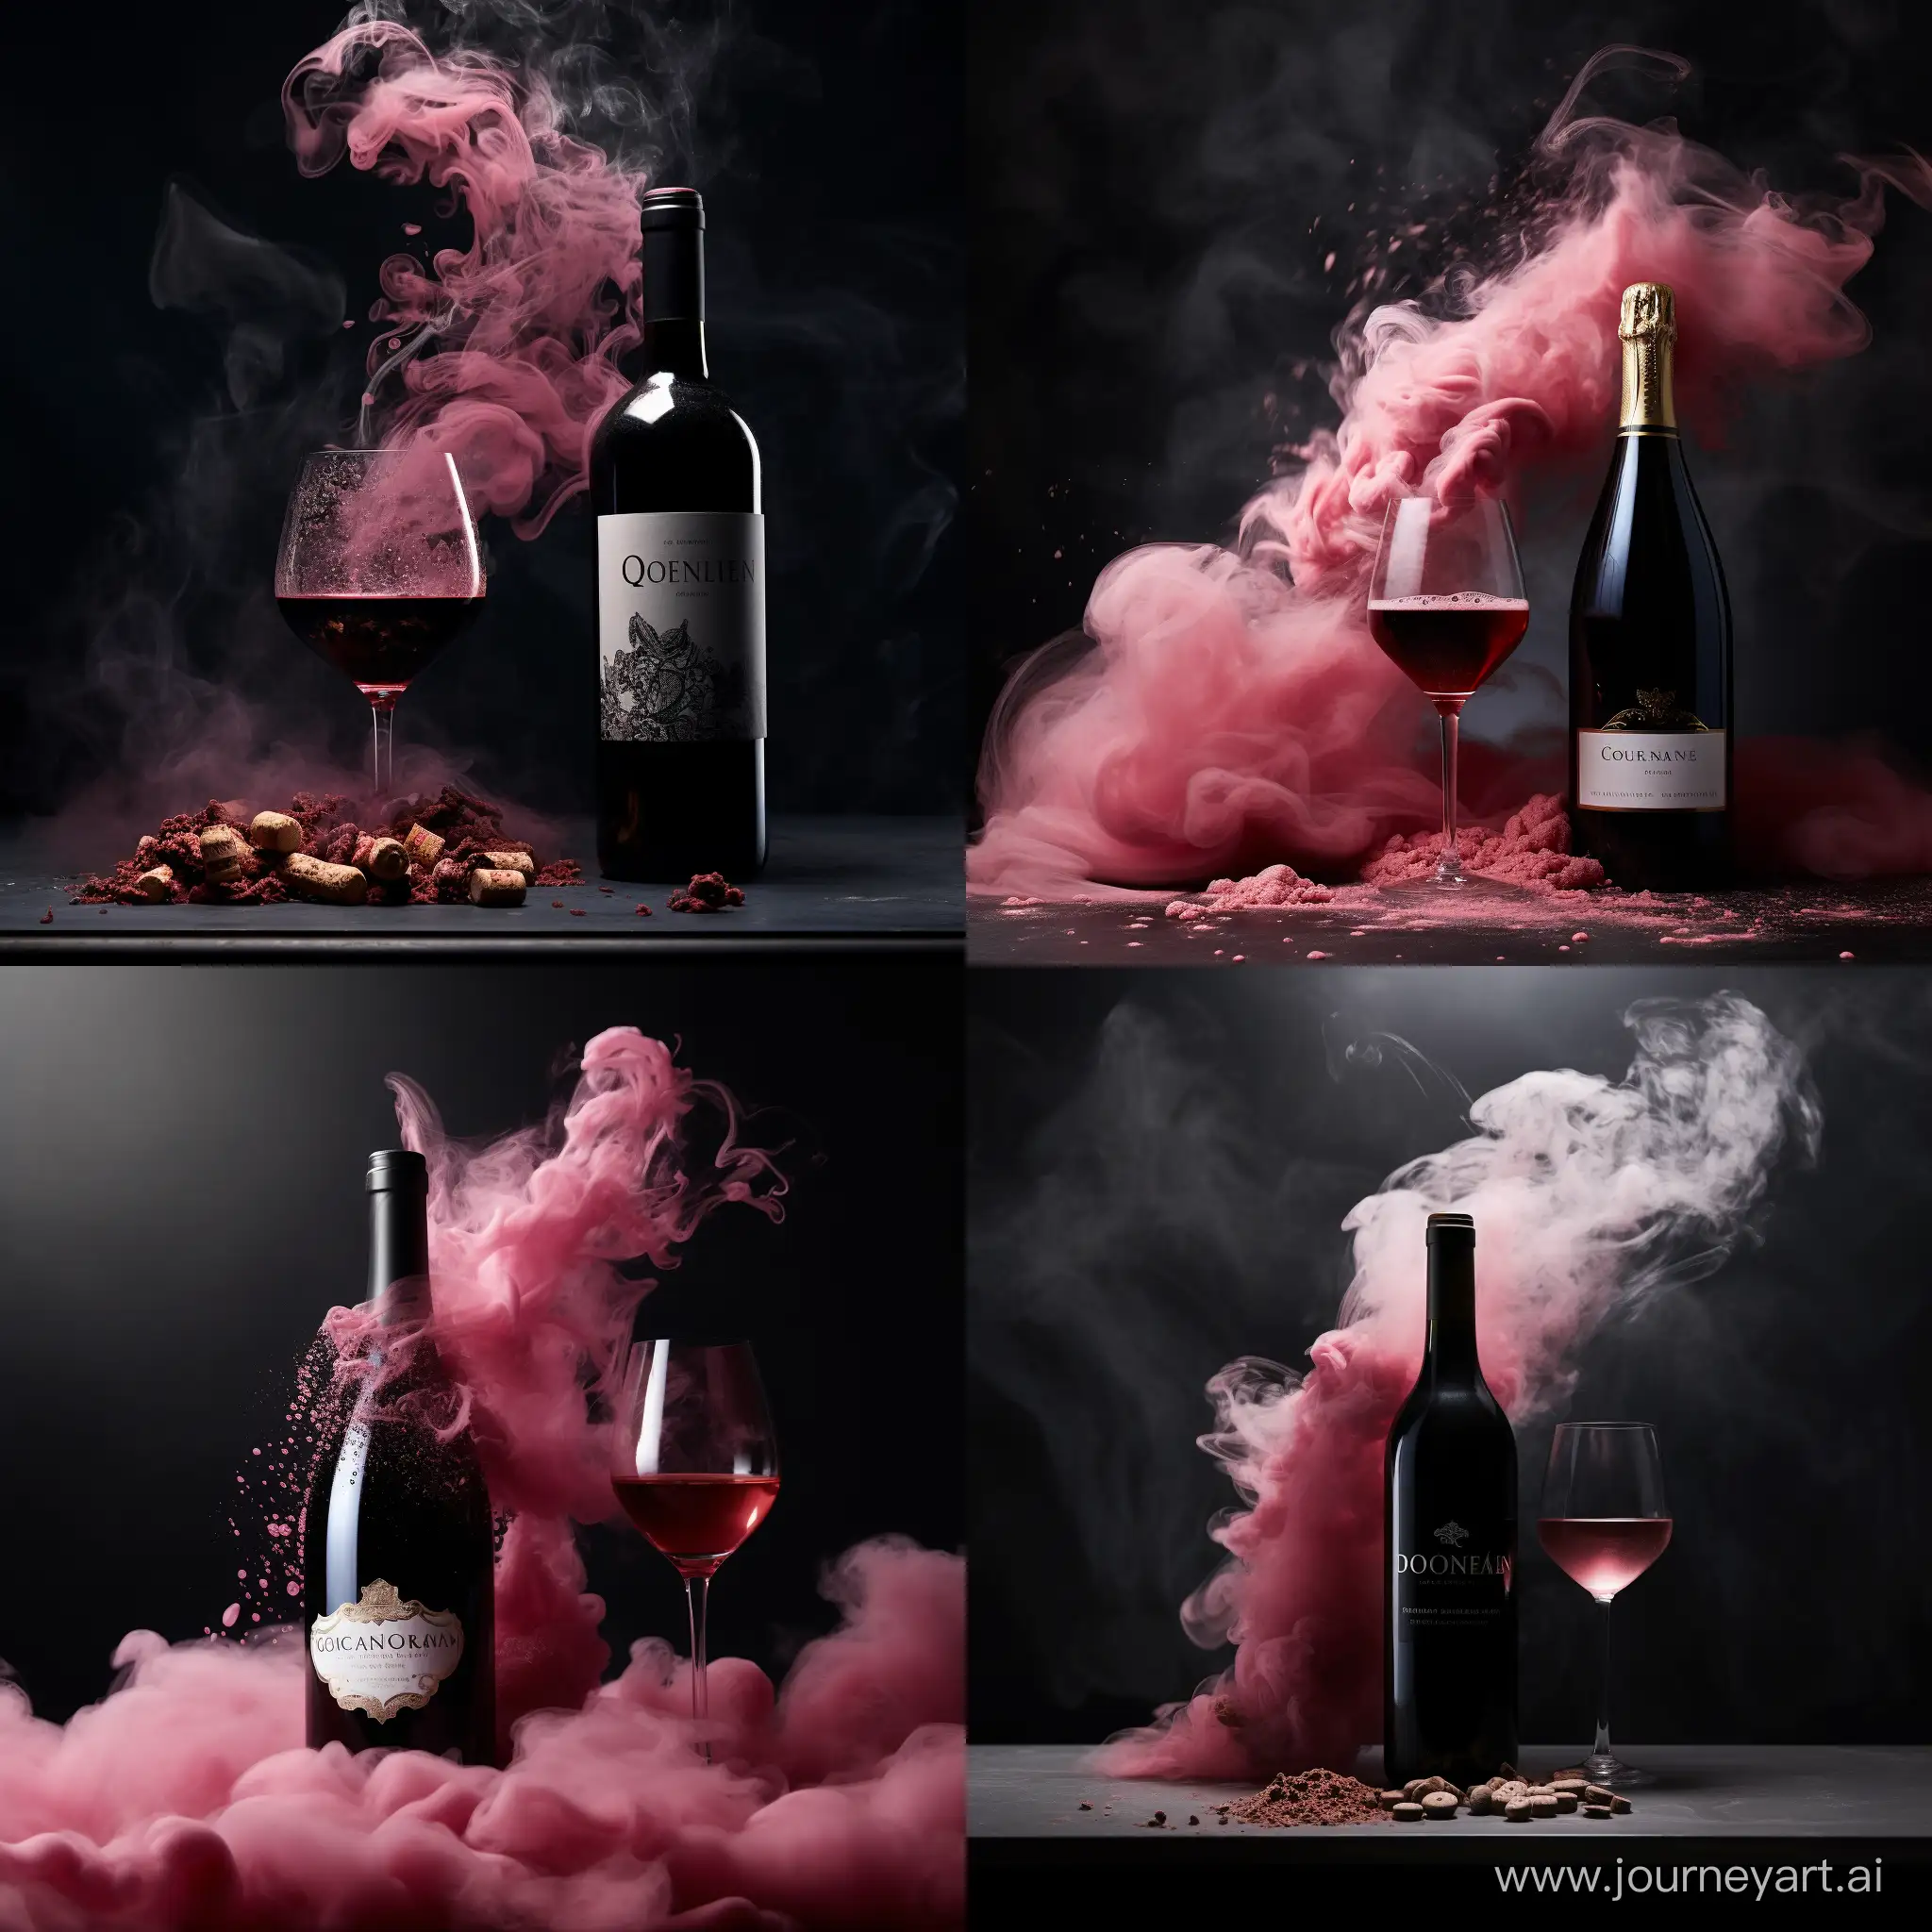 Artistic-Wine-Bottle-Smoke-Spellbindingly-Shapes-Queen-in-Pink-Hues